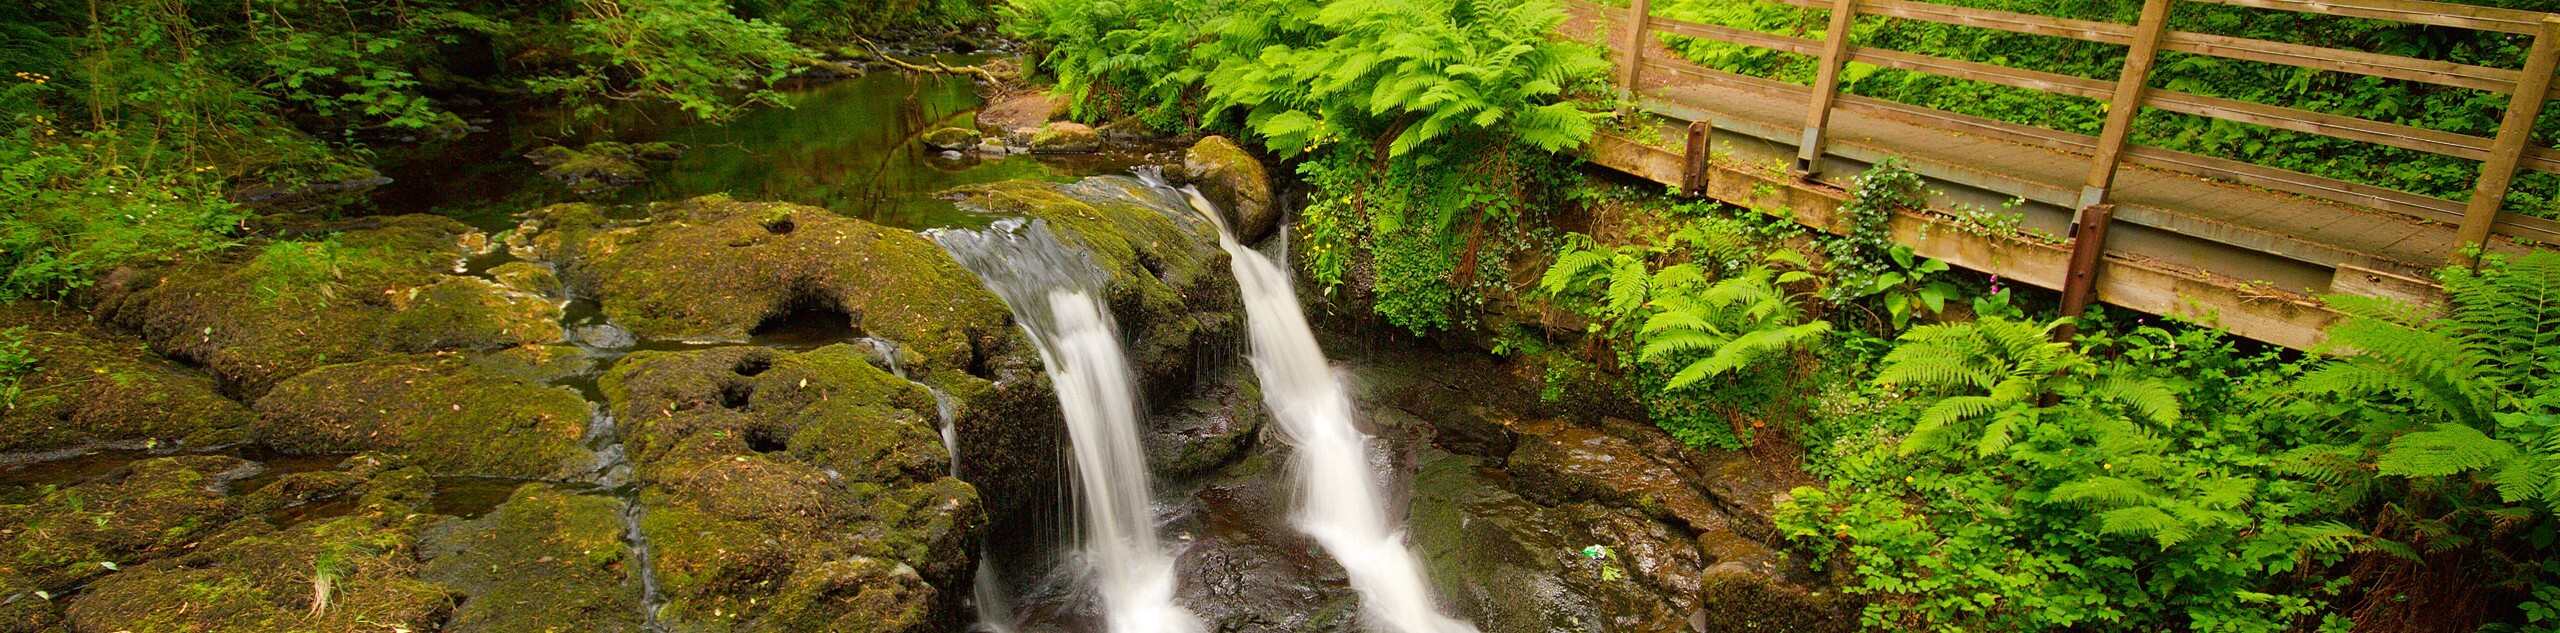 Glenariff Forest Park Waterfall Trail